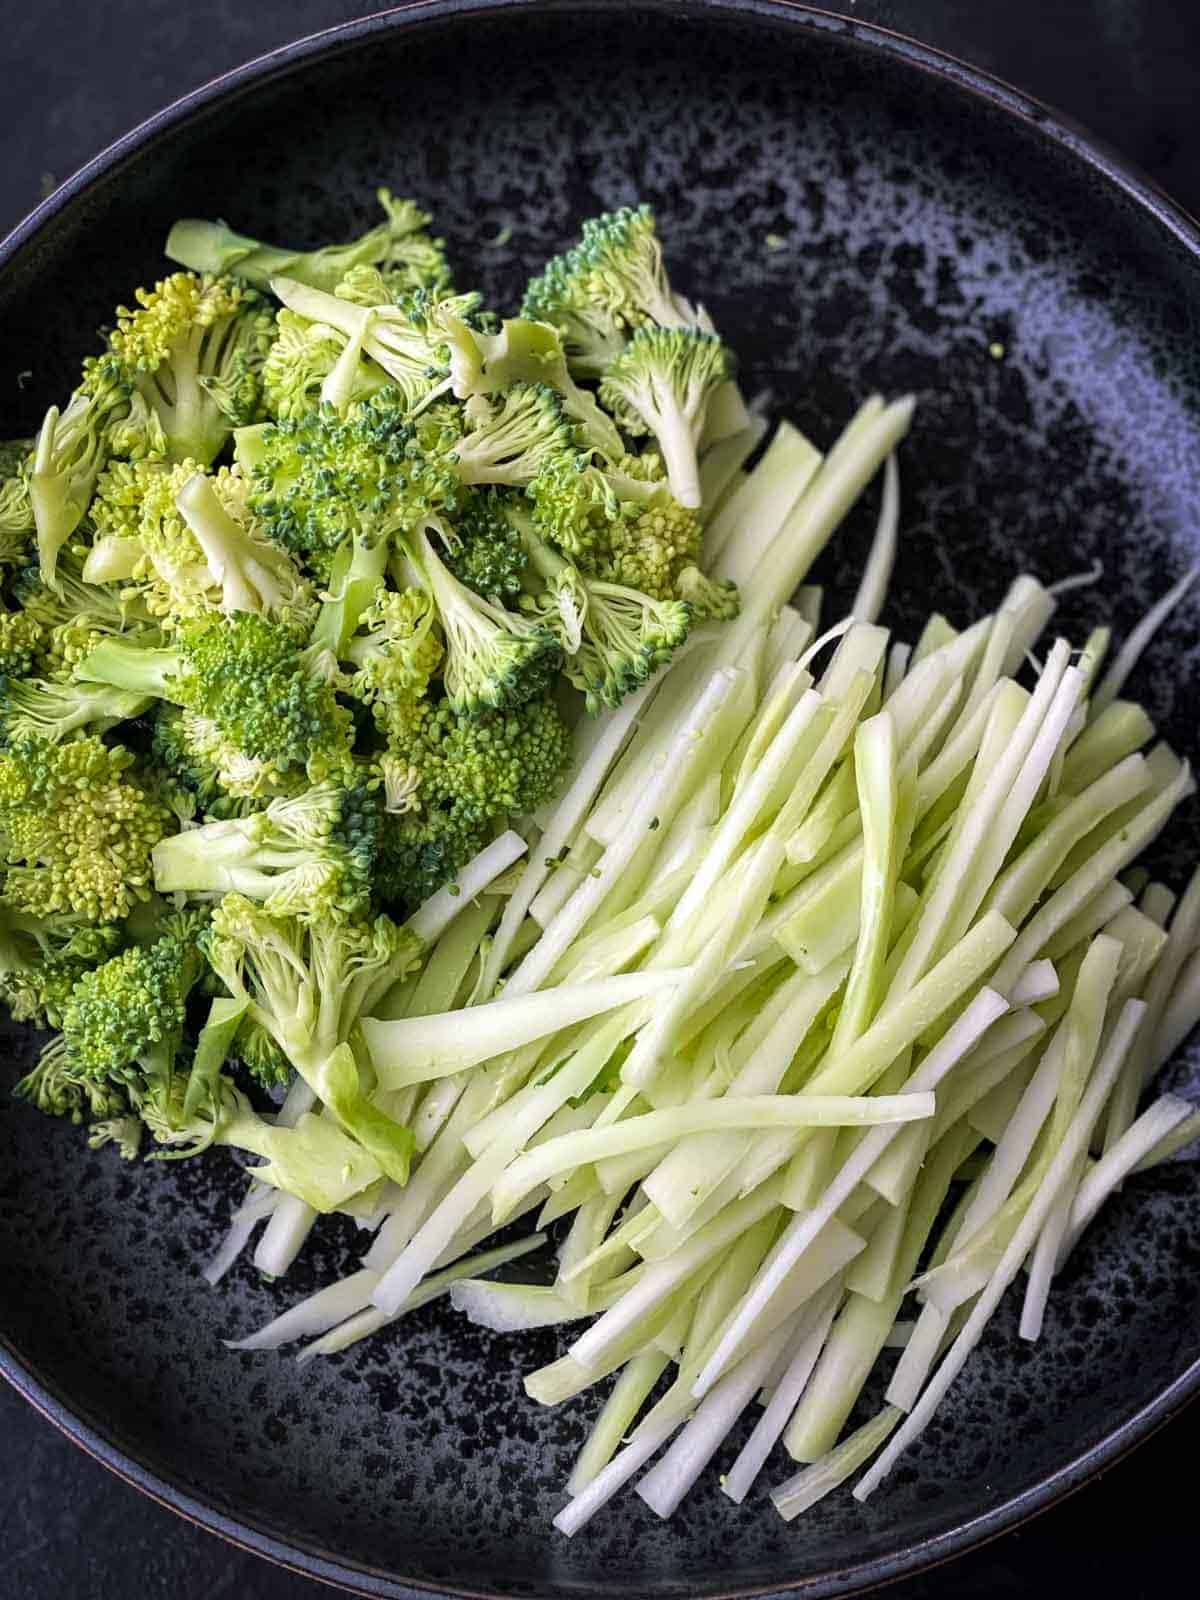 Small cuts of broccoli florets next to match stick broccoli stems on a black plate.